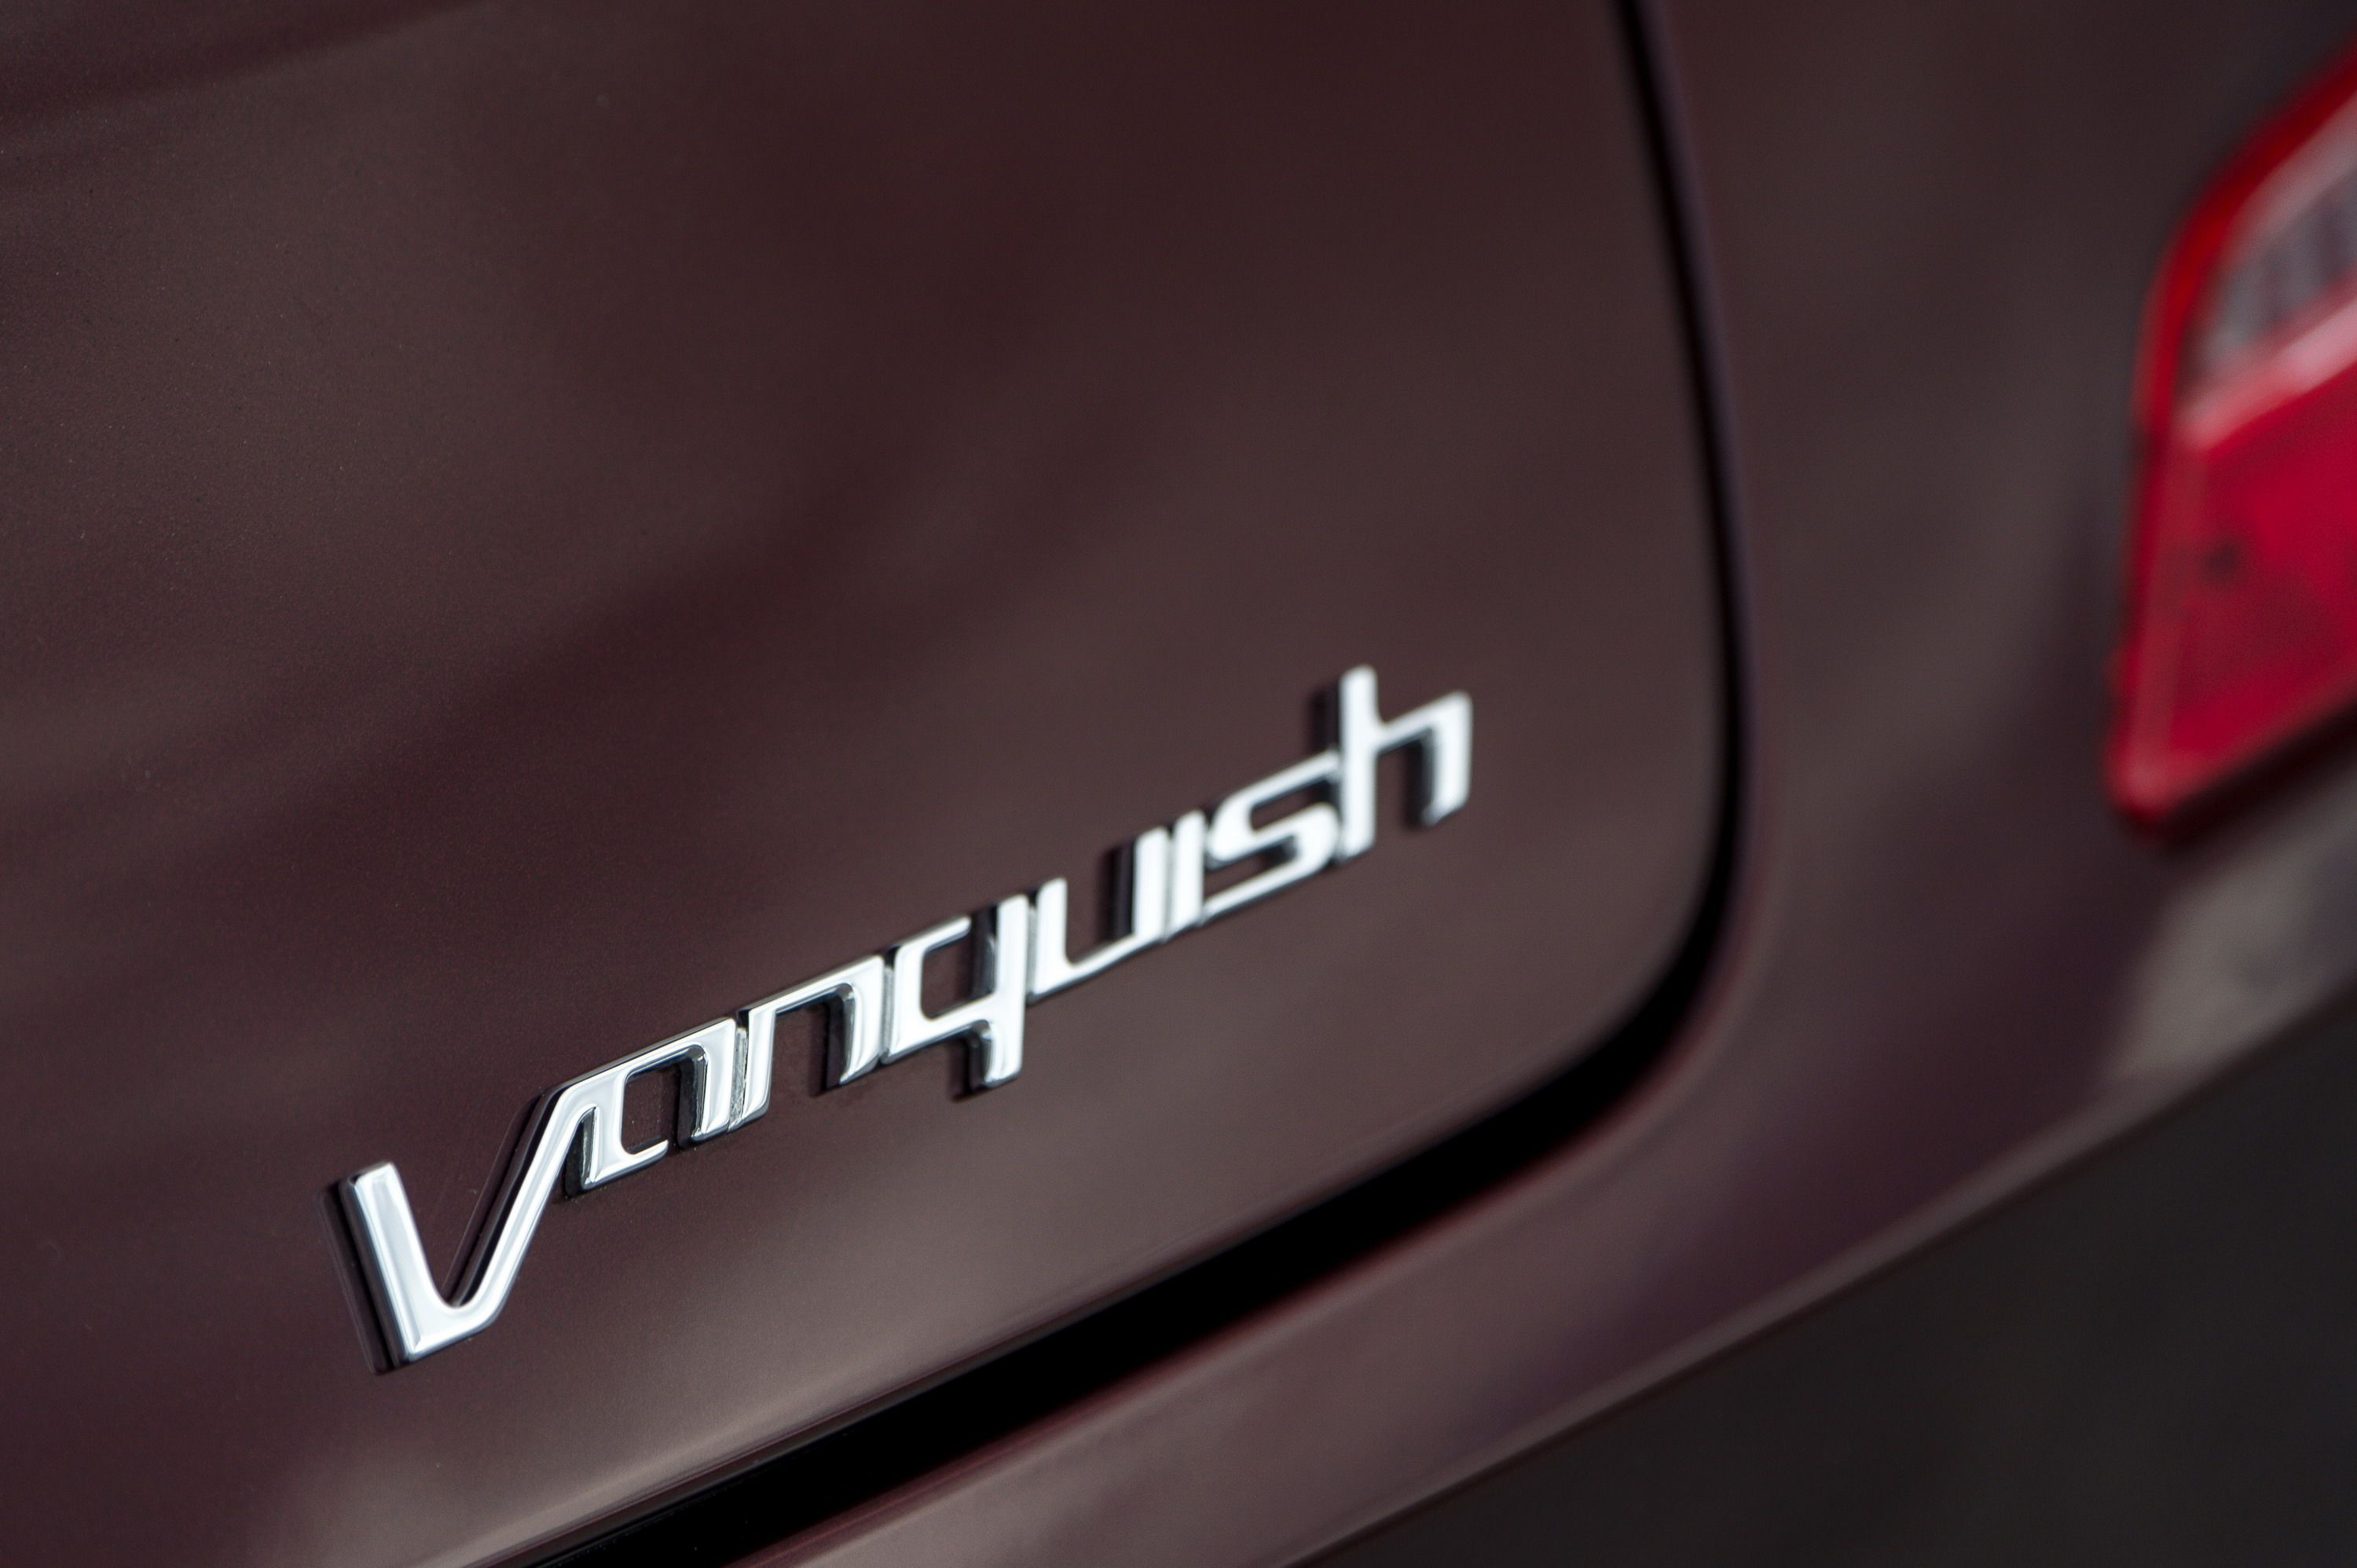 2014 - 2015 Aston Martin Vanquish Volante